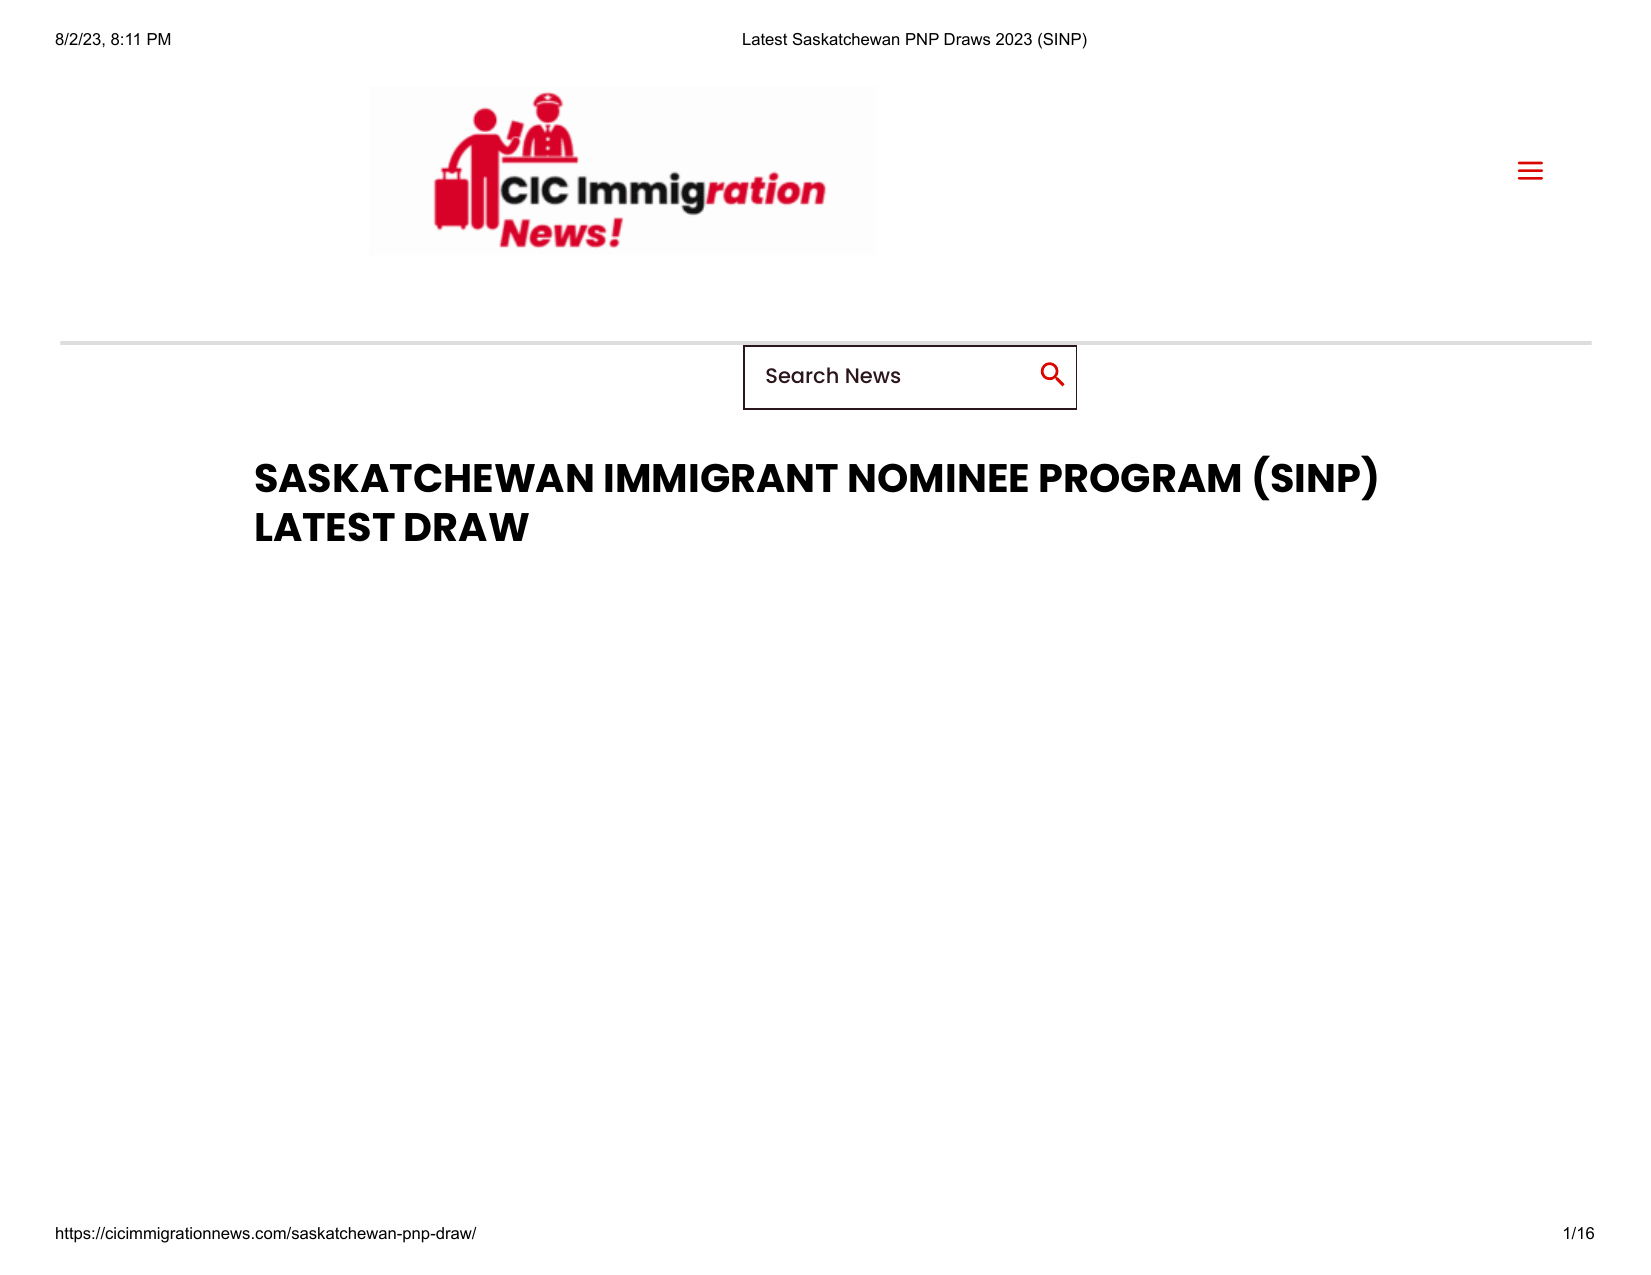 Saskatchewan Issues Invitations to 1044 Skilled Immigrants in Latest Draw -